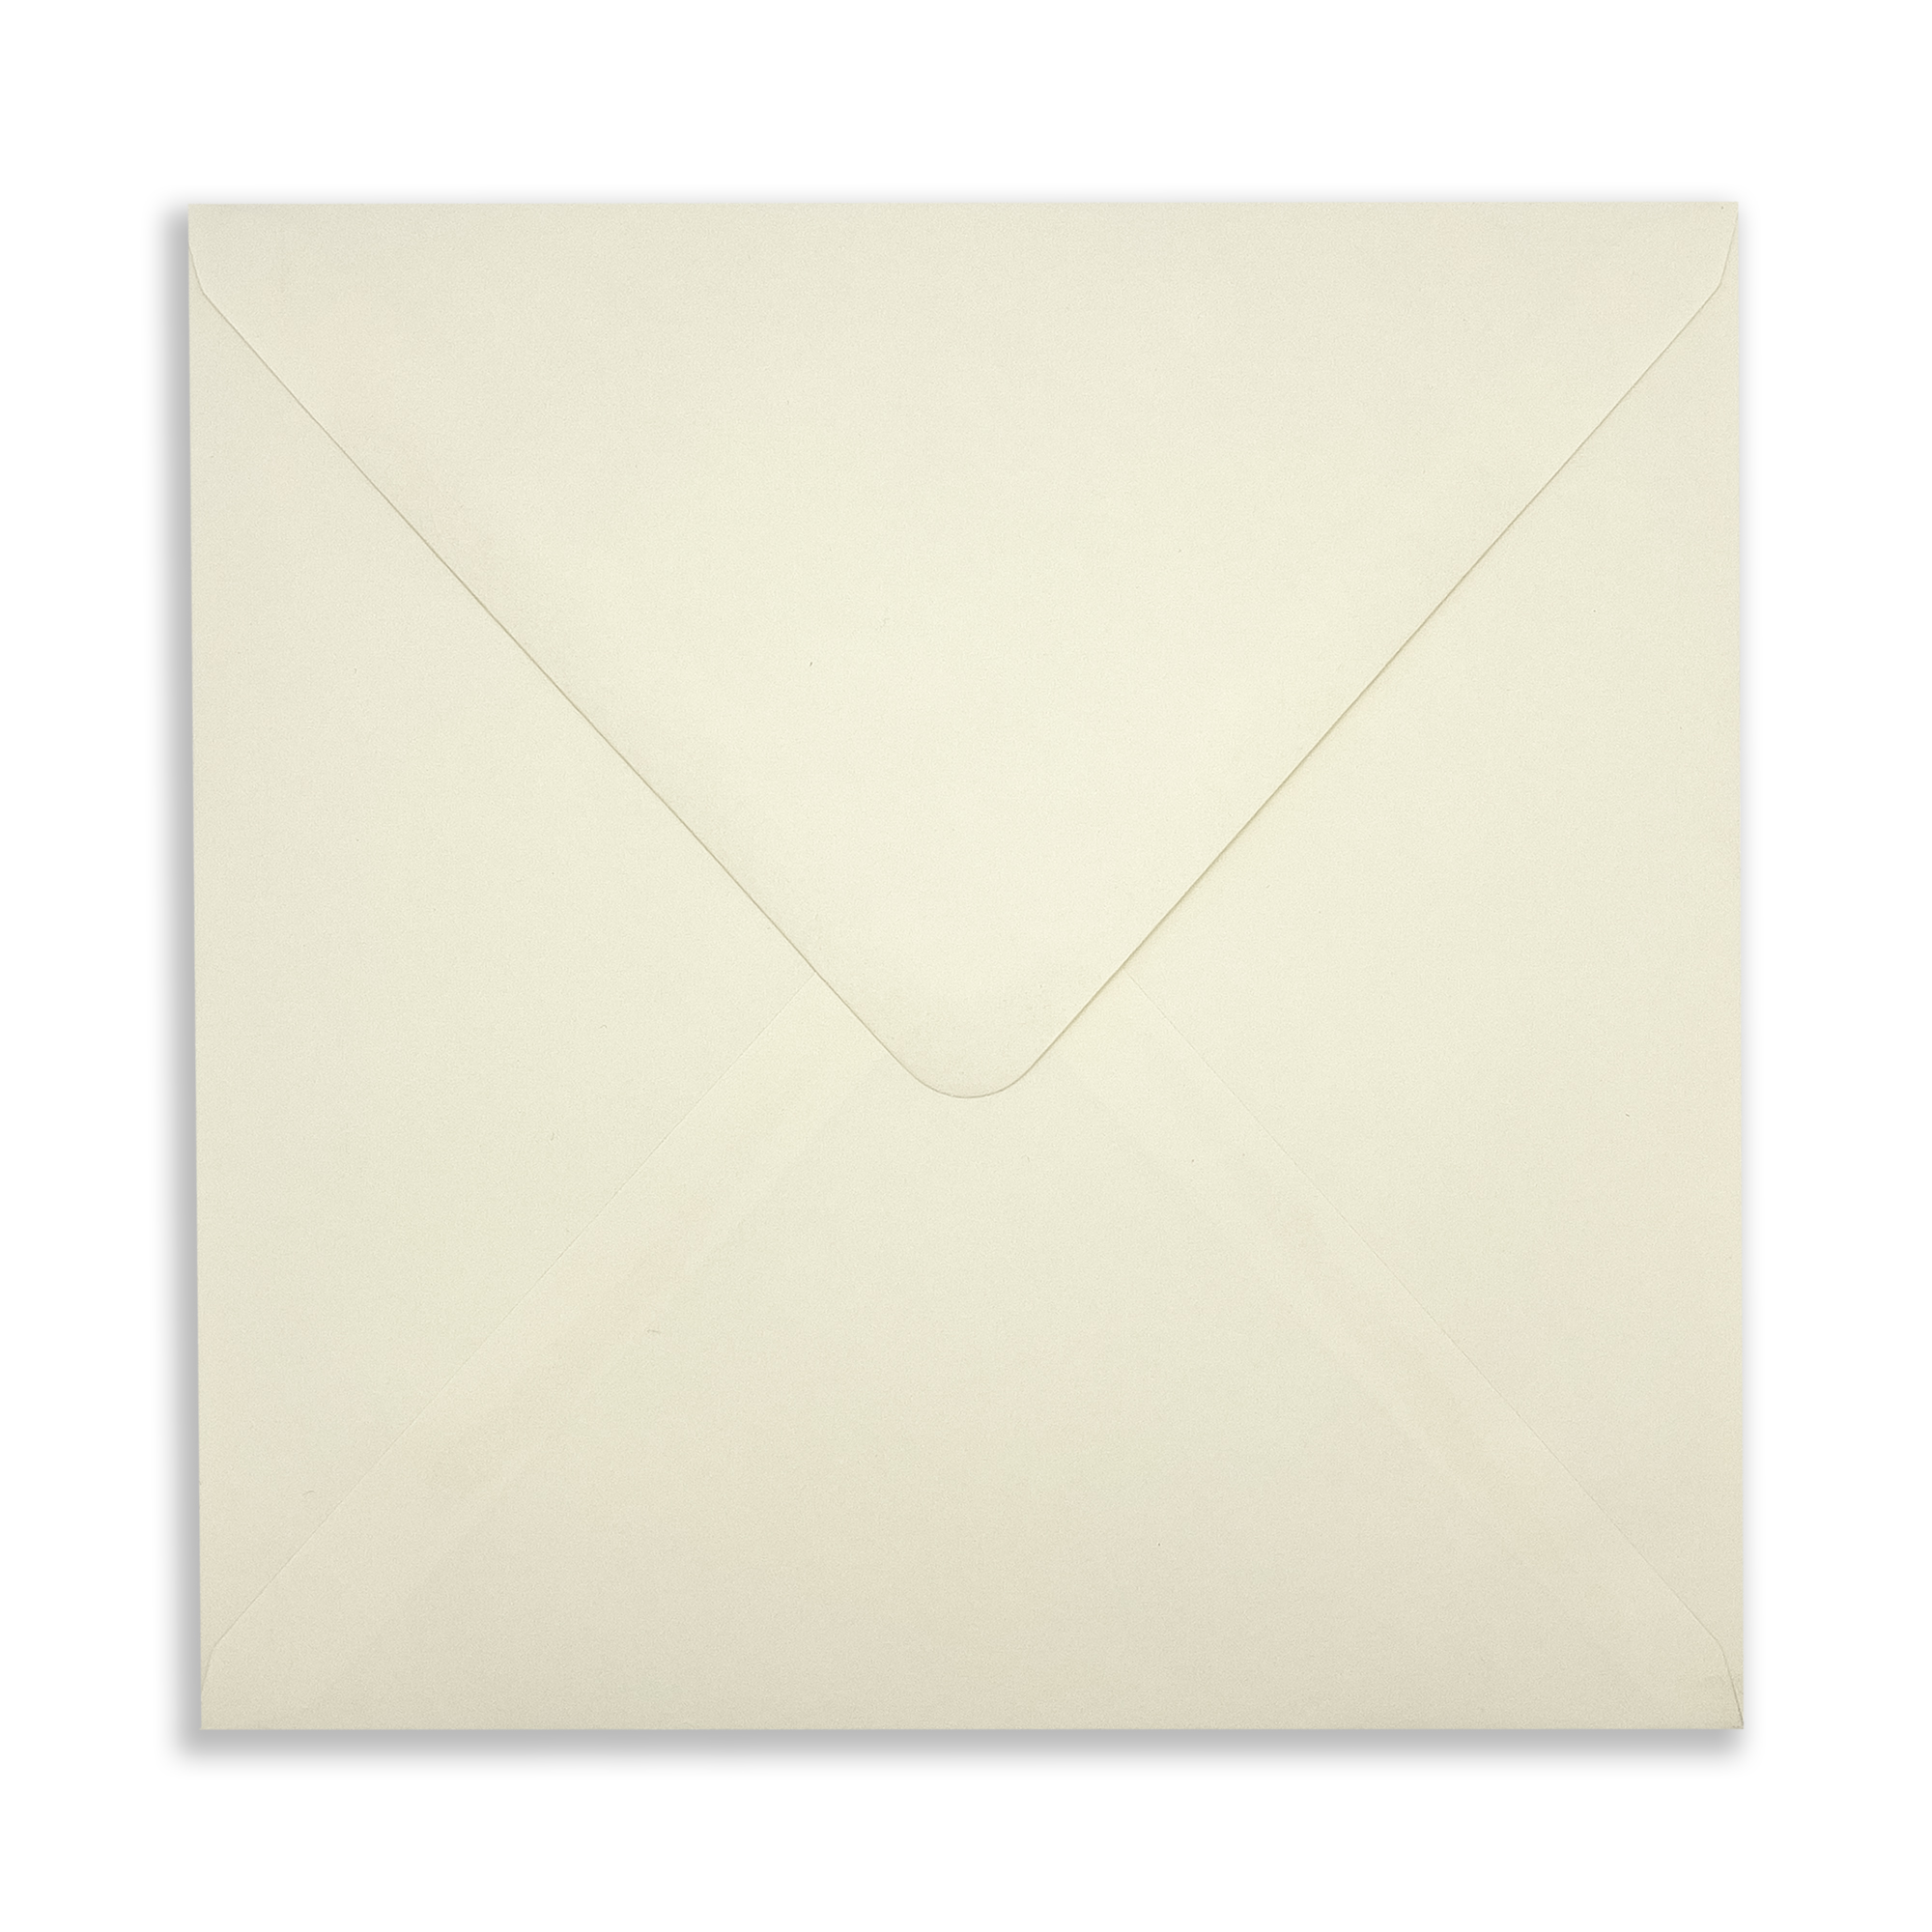 201mm SQ Kensington Cream Envelopes (100gsm)